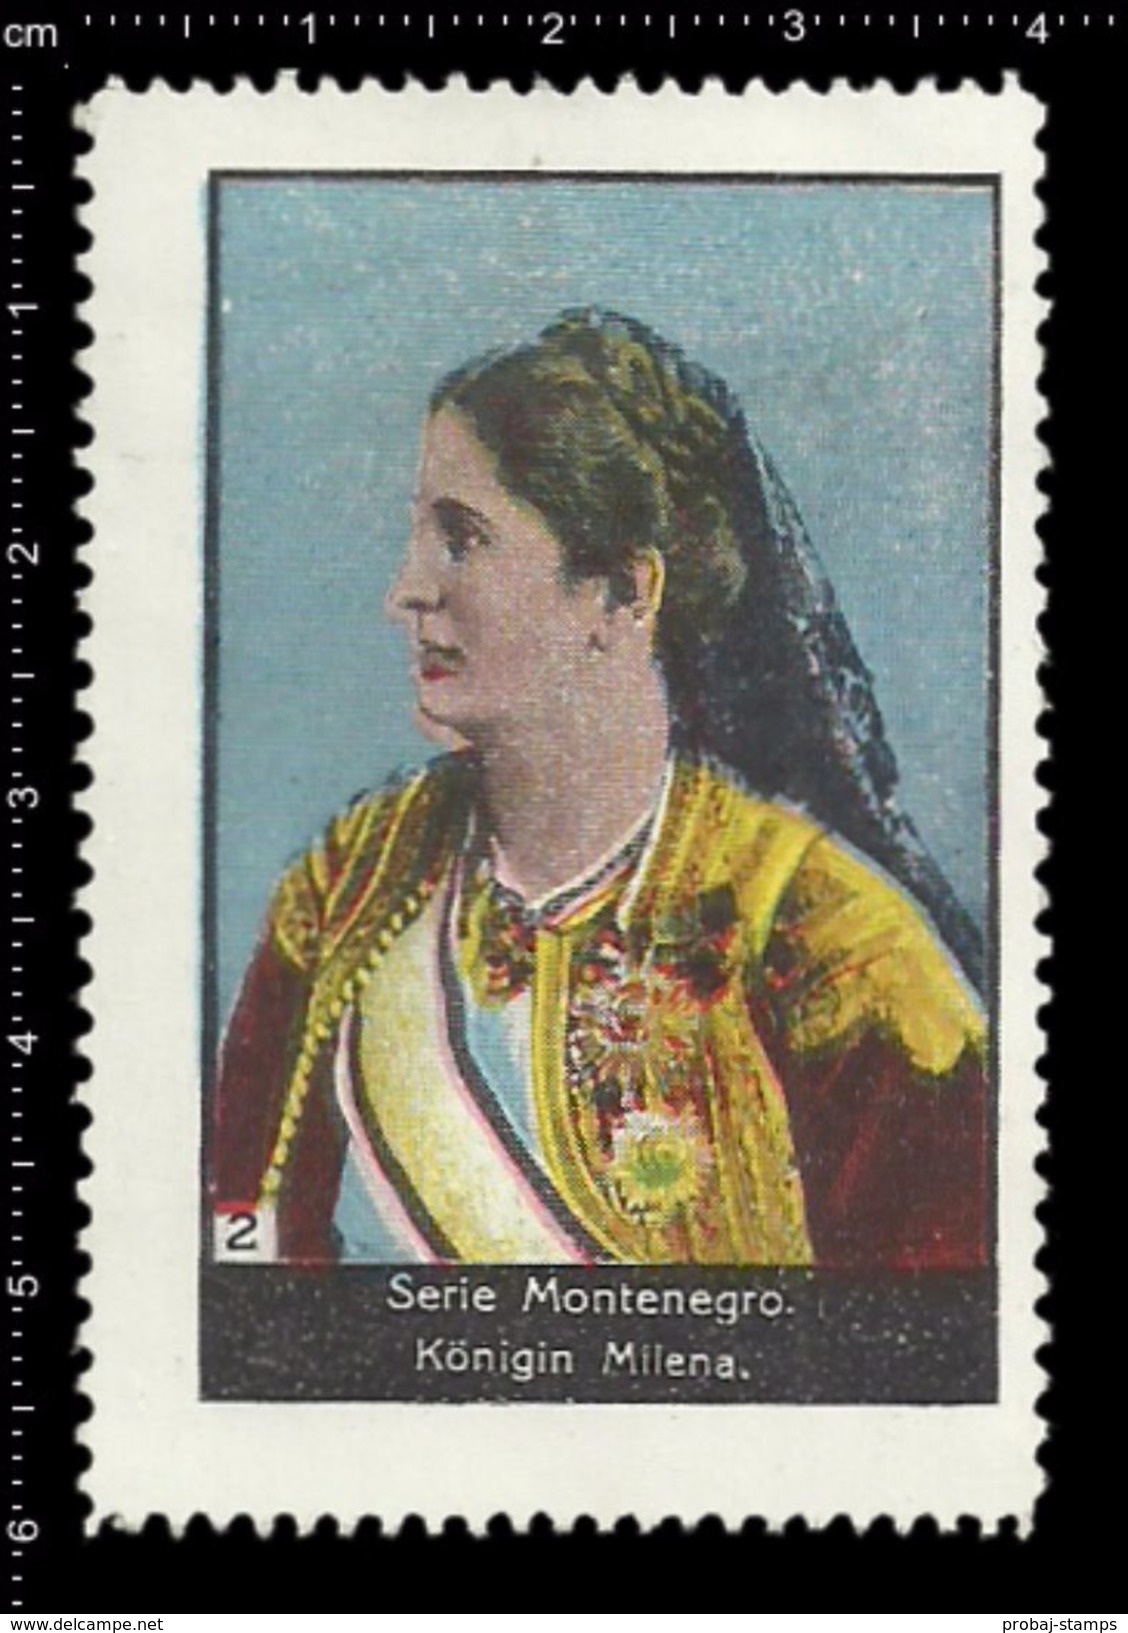 German Poster Stamps, Reklamemarke, Cinderellas, Montenegro, Königin Milena, Queen - Cinderellas